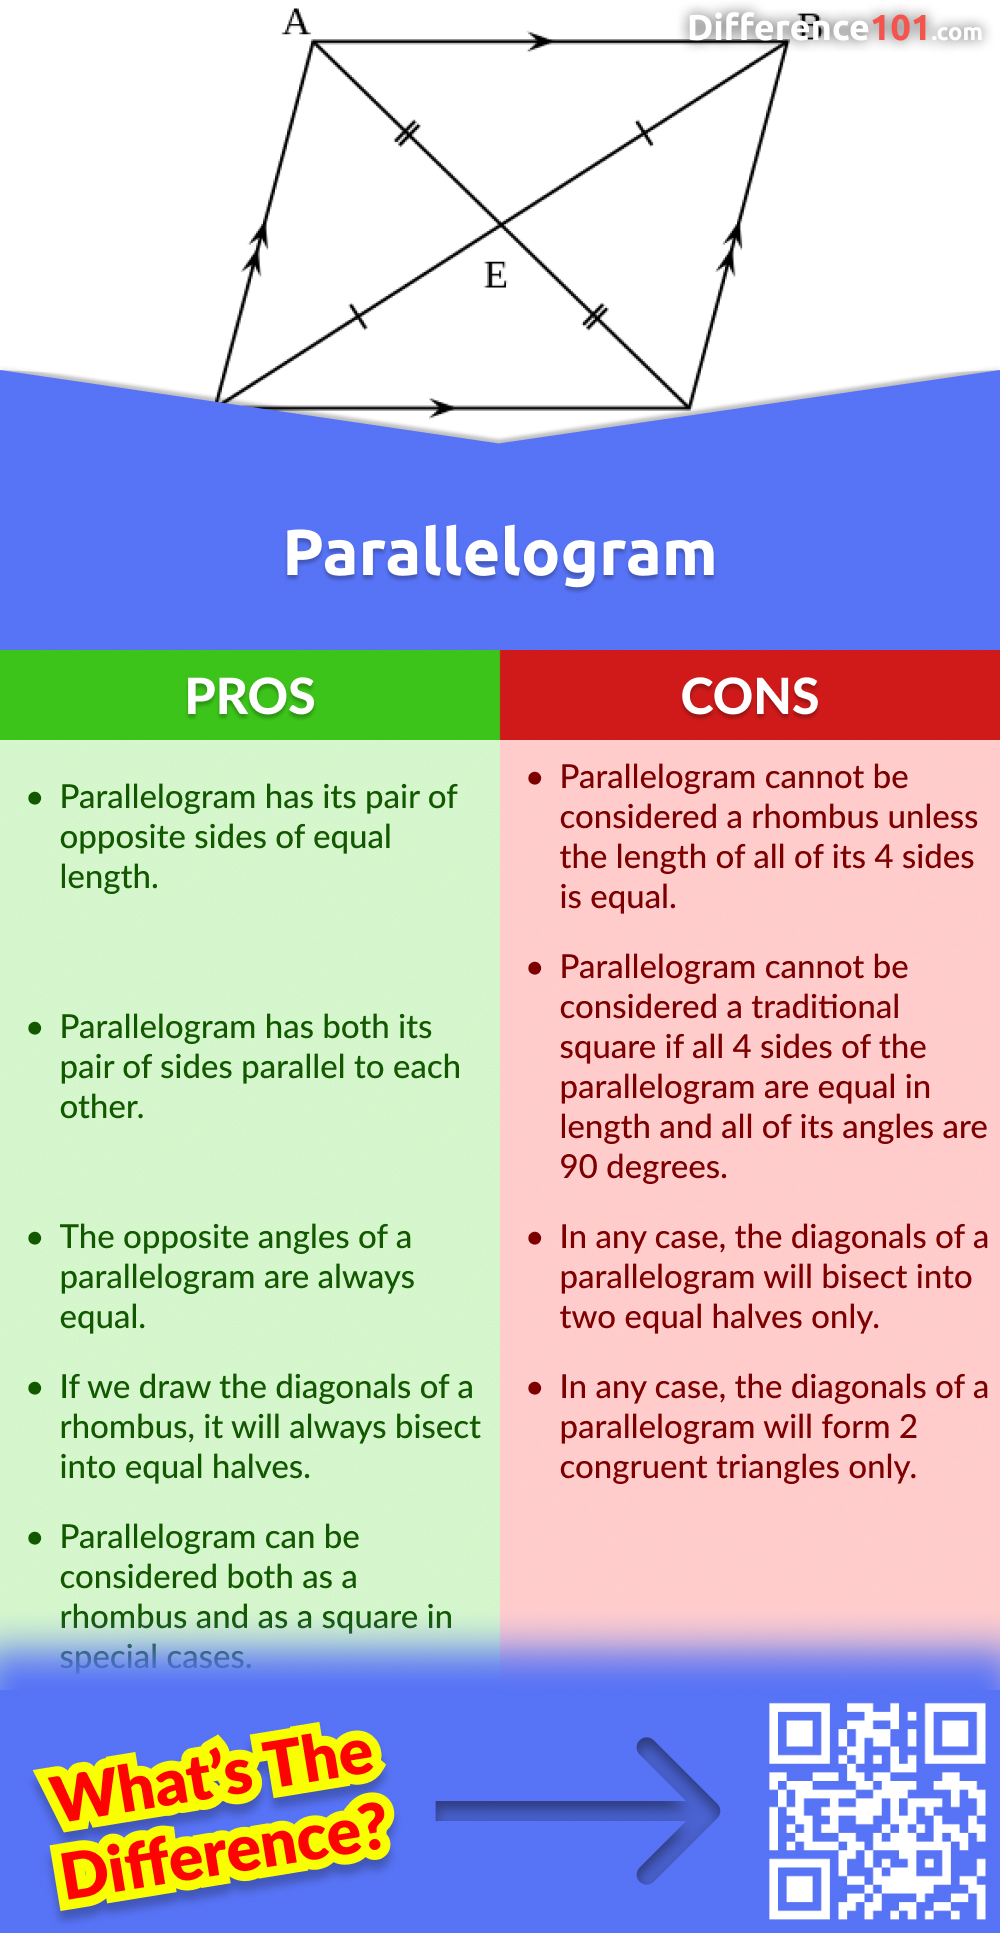 Parallelogram Pros & Cons